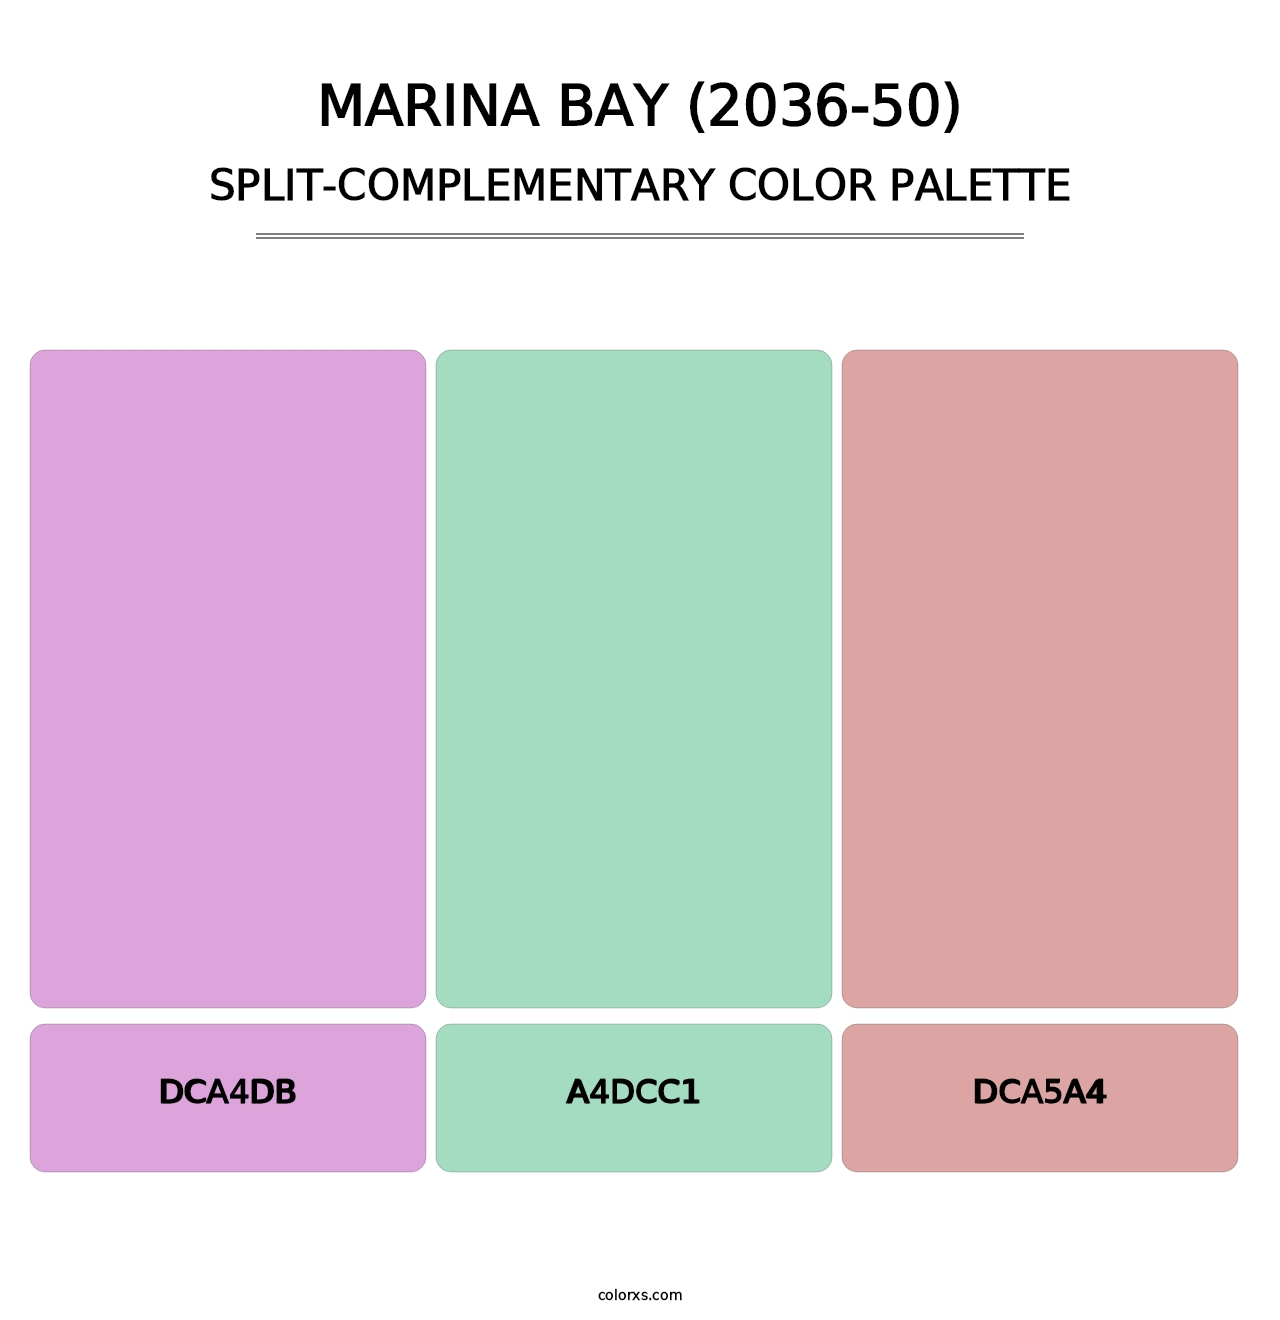 Marina Bay (2036-50) - Split-Complementary Color Palette